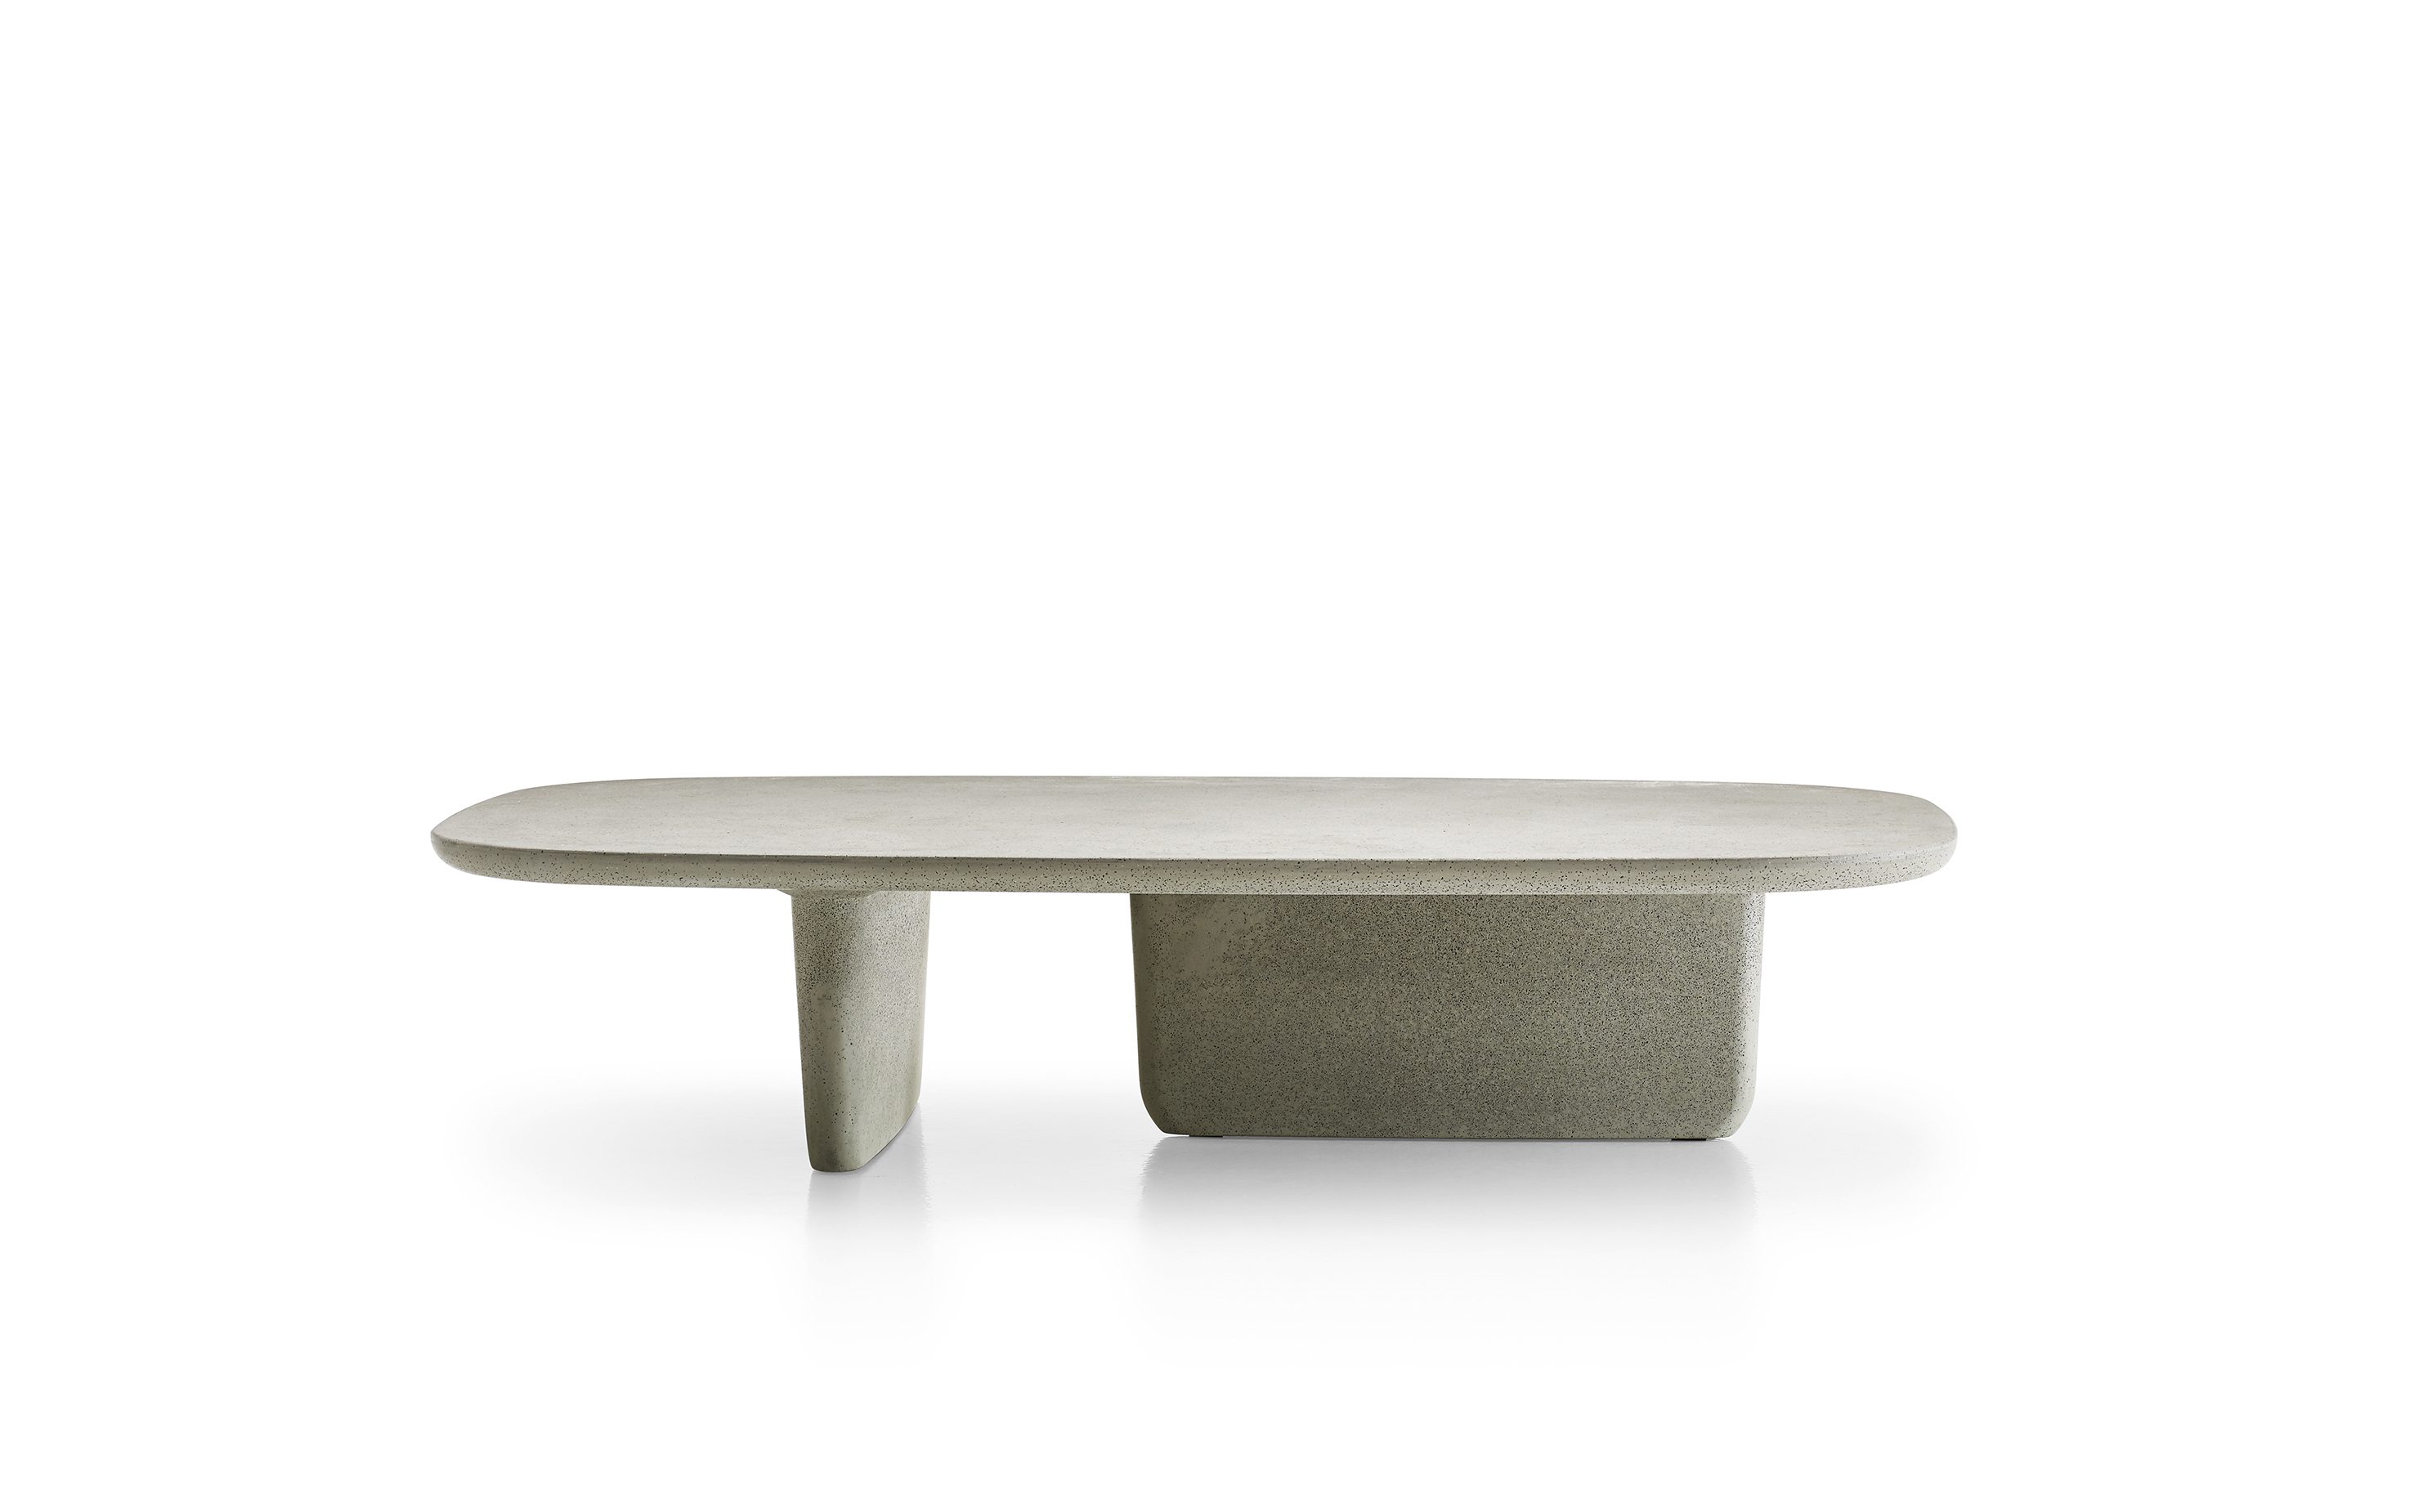 B&B Italia design 2018, “topi-ishi”, coffee table in grey cement or anthracite.